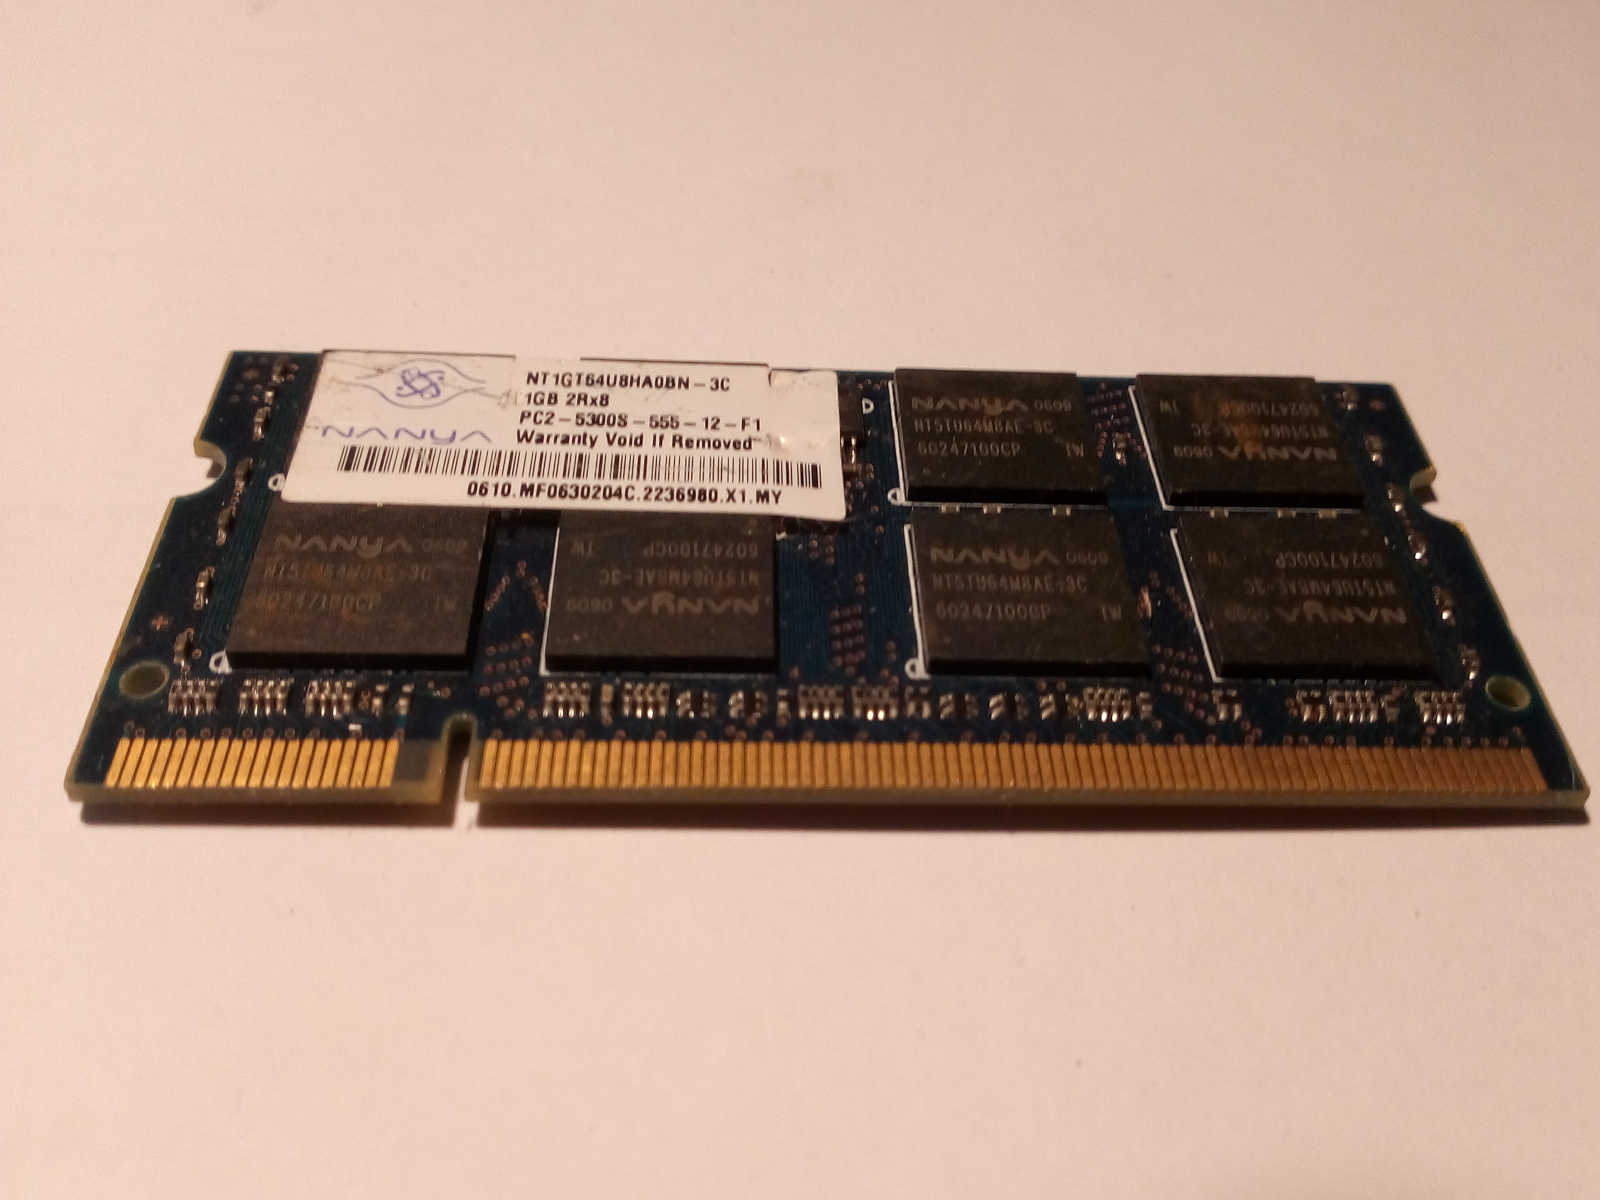 NT1GT64U8HA0BN-3C RAM Portable NANYA DDR2 1Gb non ECC PC2-5300S, CL5, temps du cycle 3ns, 1.8V (+/-0.1), garantie 2 ans